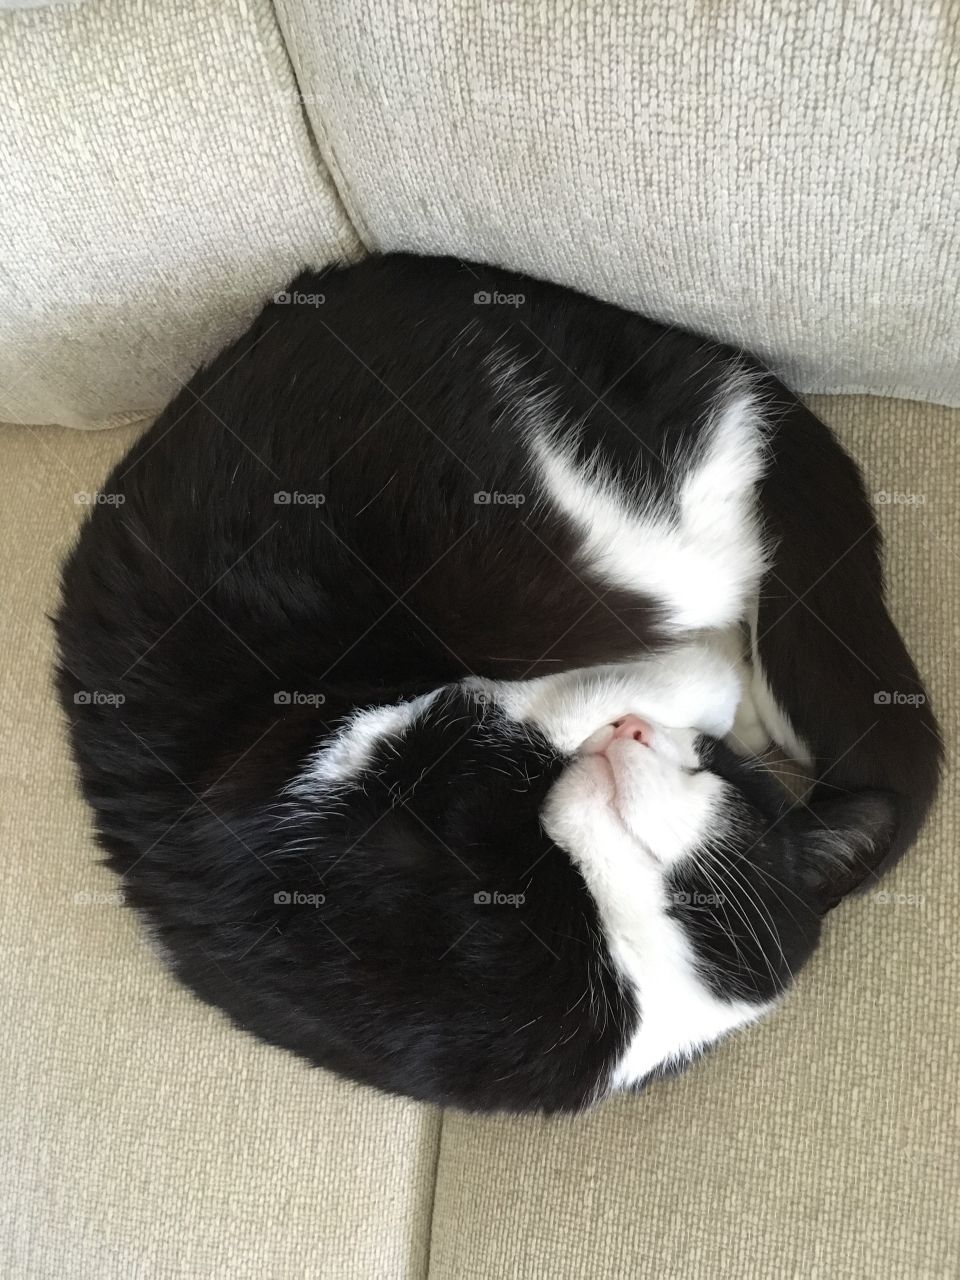 Sleeping cat like a ball.